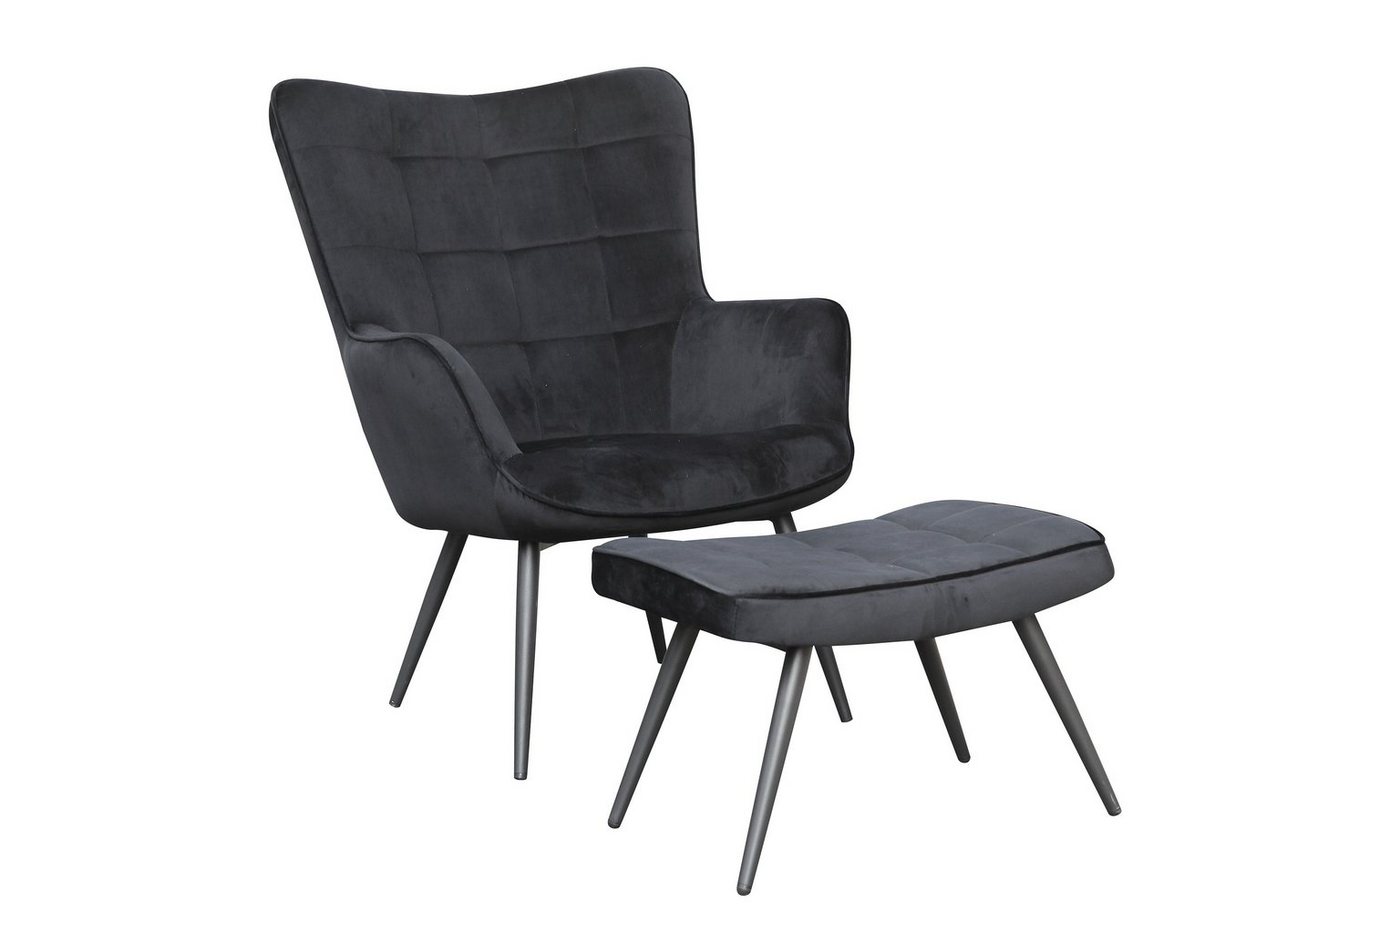 byLIVING Sessel UTA (bestehend aus Sessel und Hocker, Bezug: Samtstoff, Webstoff, Cordstoff Farbe: dunkelgrün, grau, schwarz), Sessel: B 72, H 97, T 80 cm / Hocker B 60, H 39, T 41 cm von byLIVING